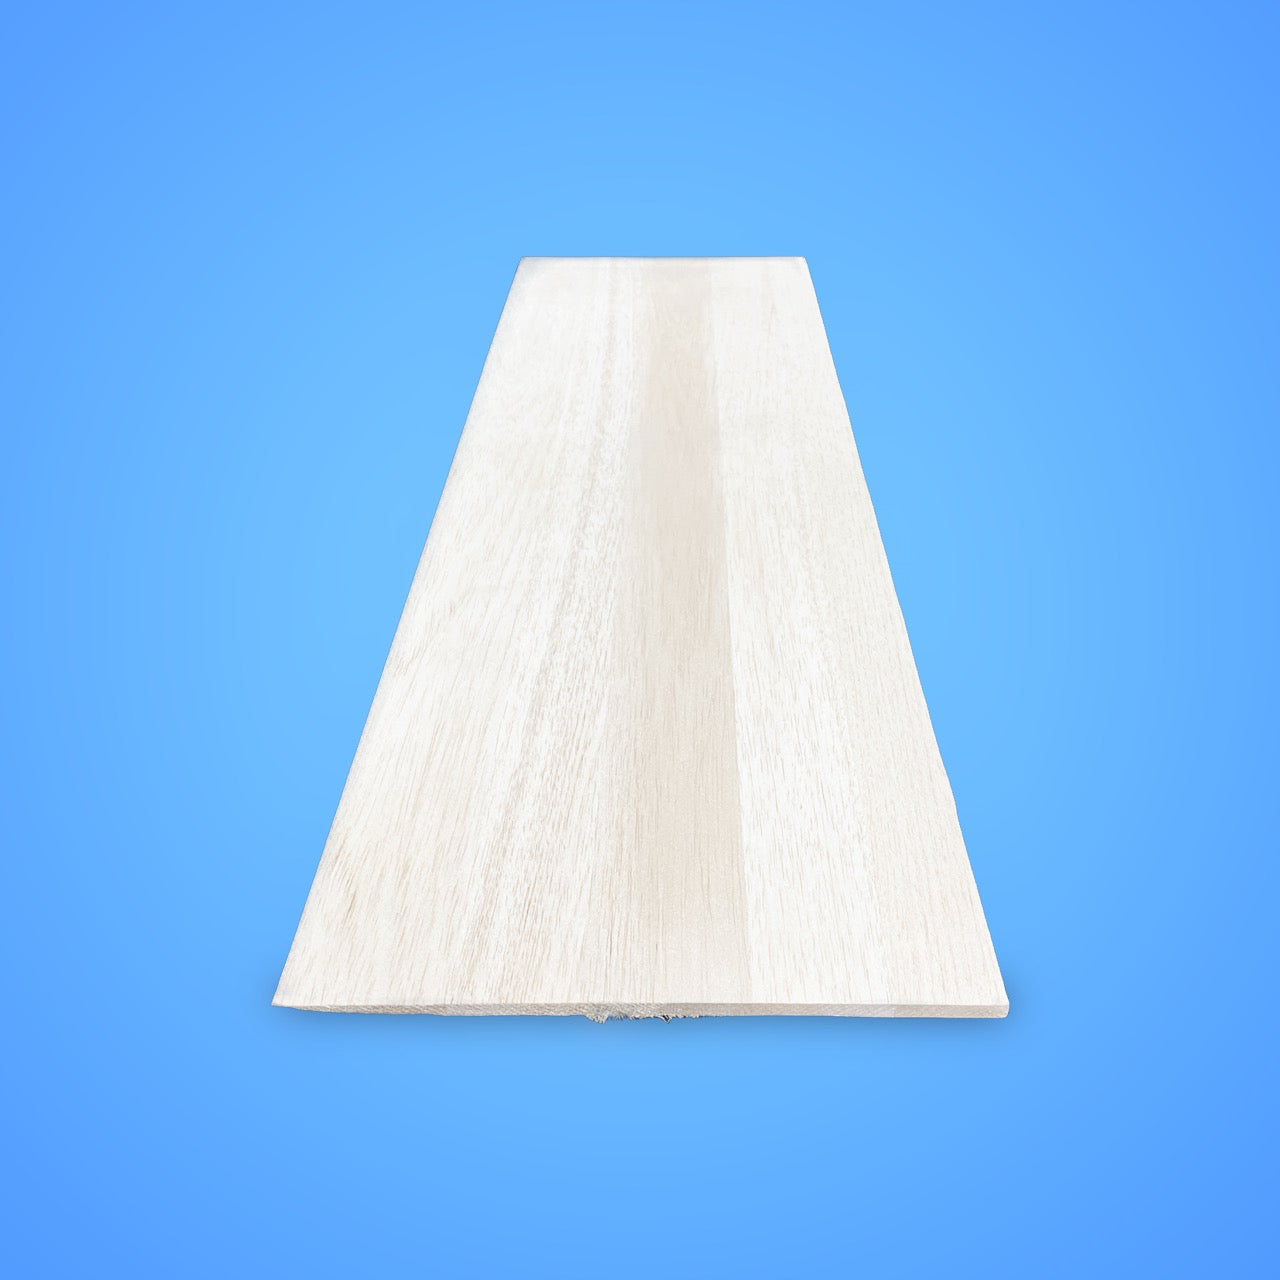 1/4 x 4 x 48 Aero Light Balsa Wood Sheets